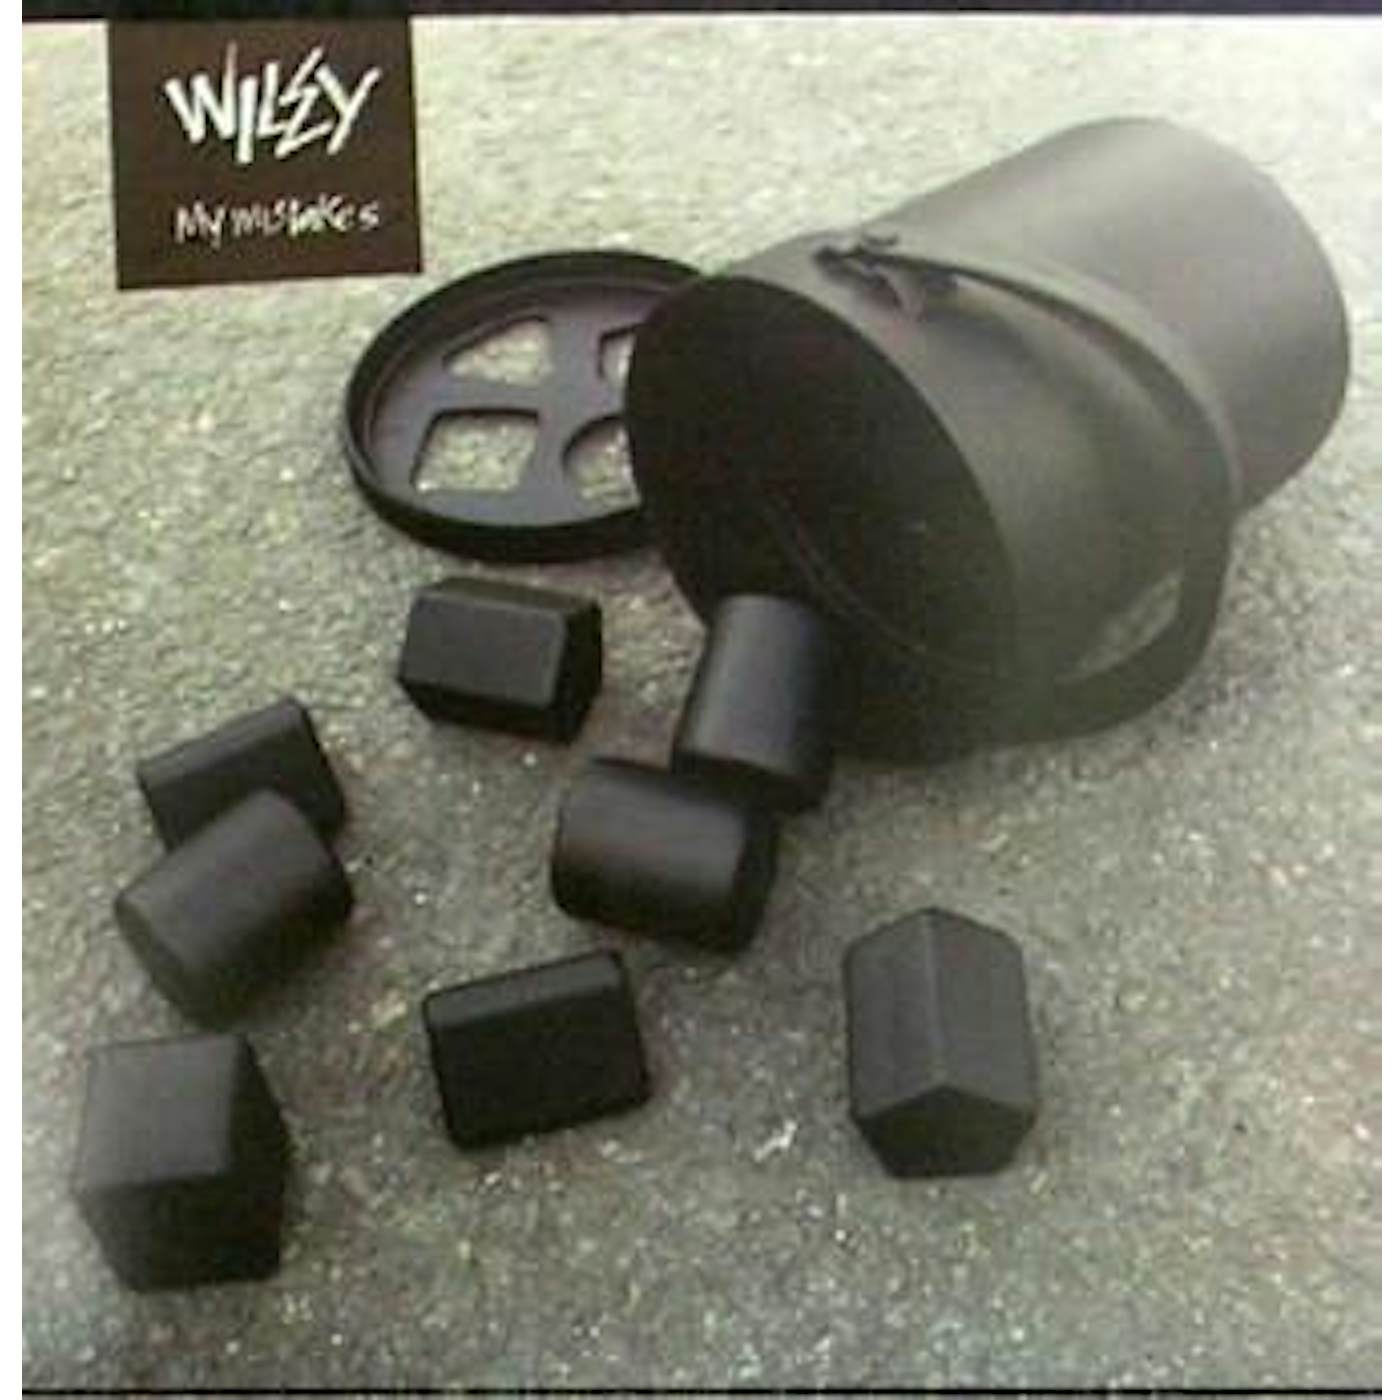 Wiley My Mistakes 12 Vinyl Record